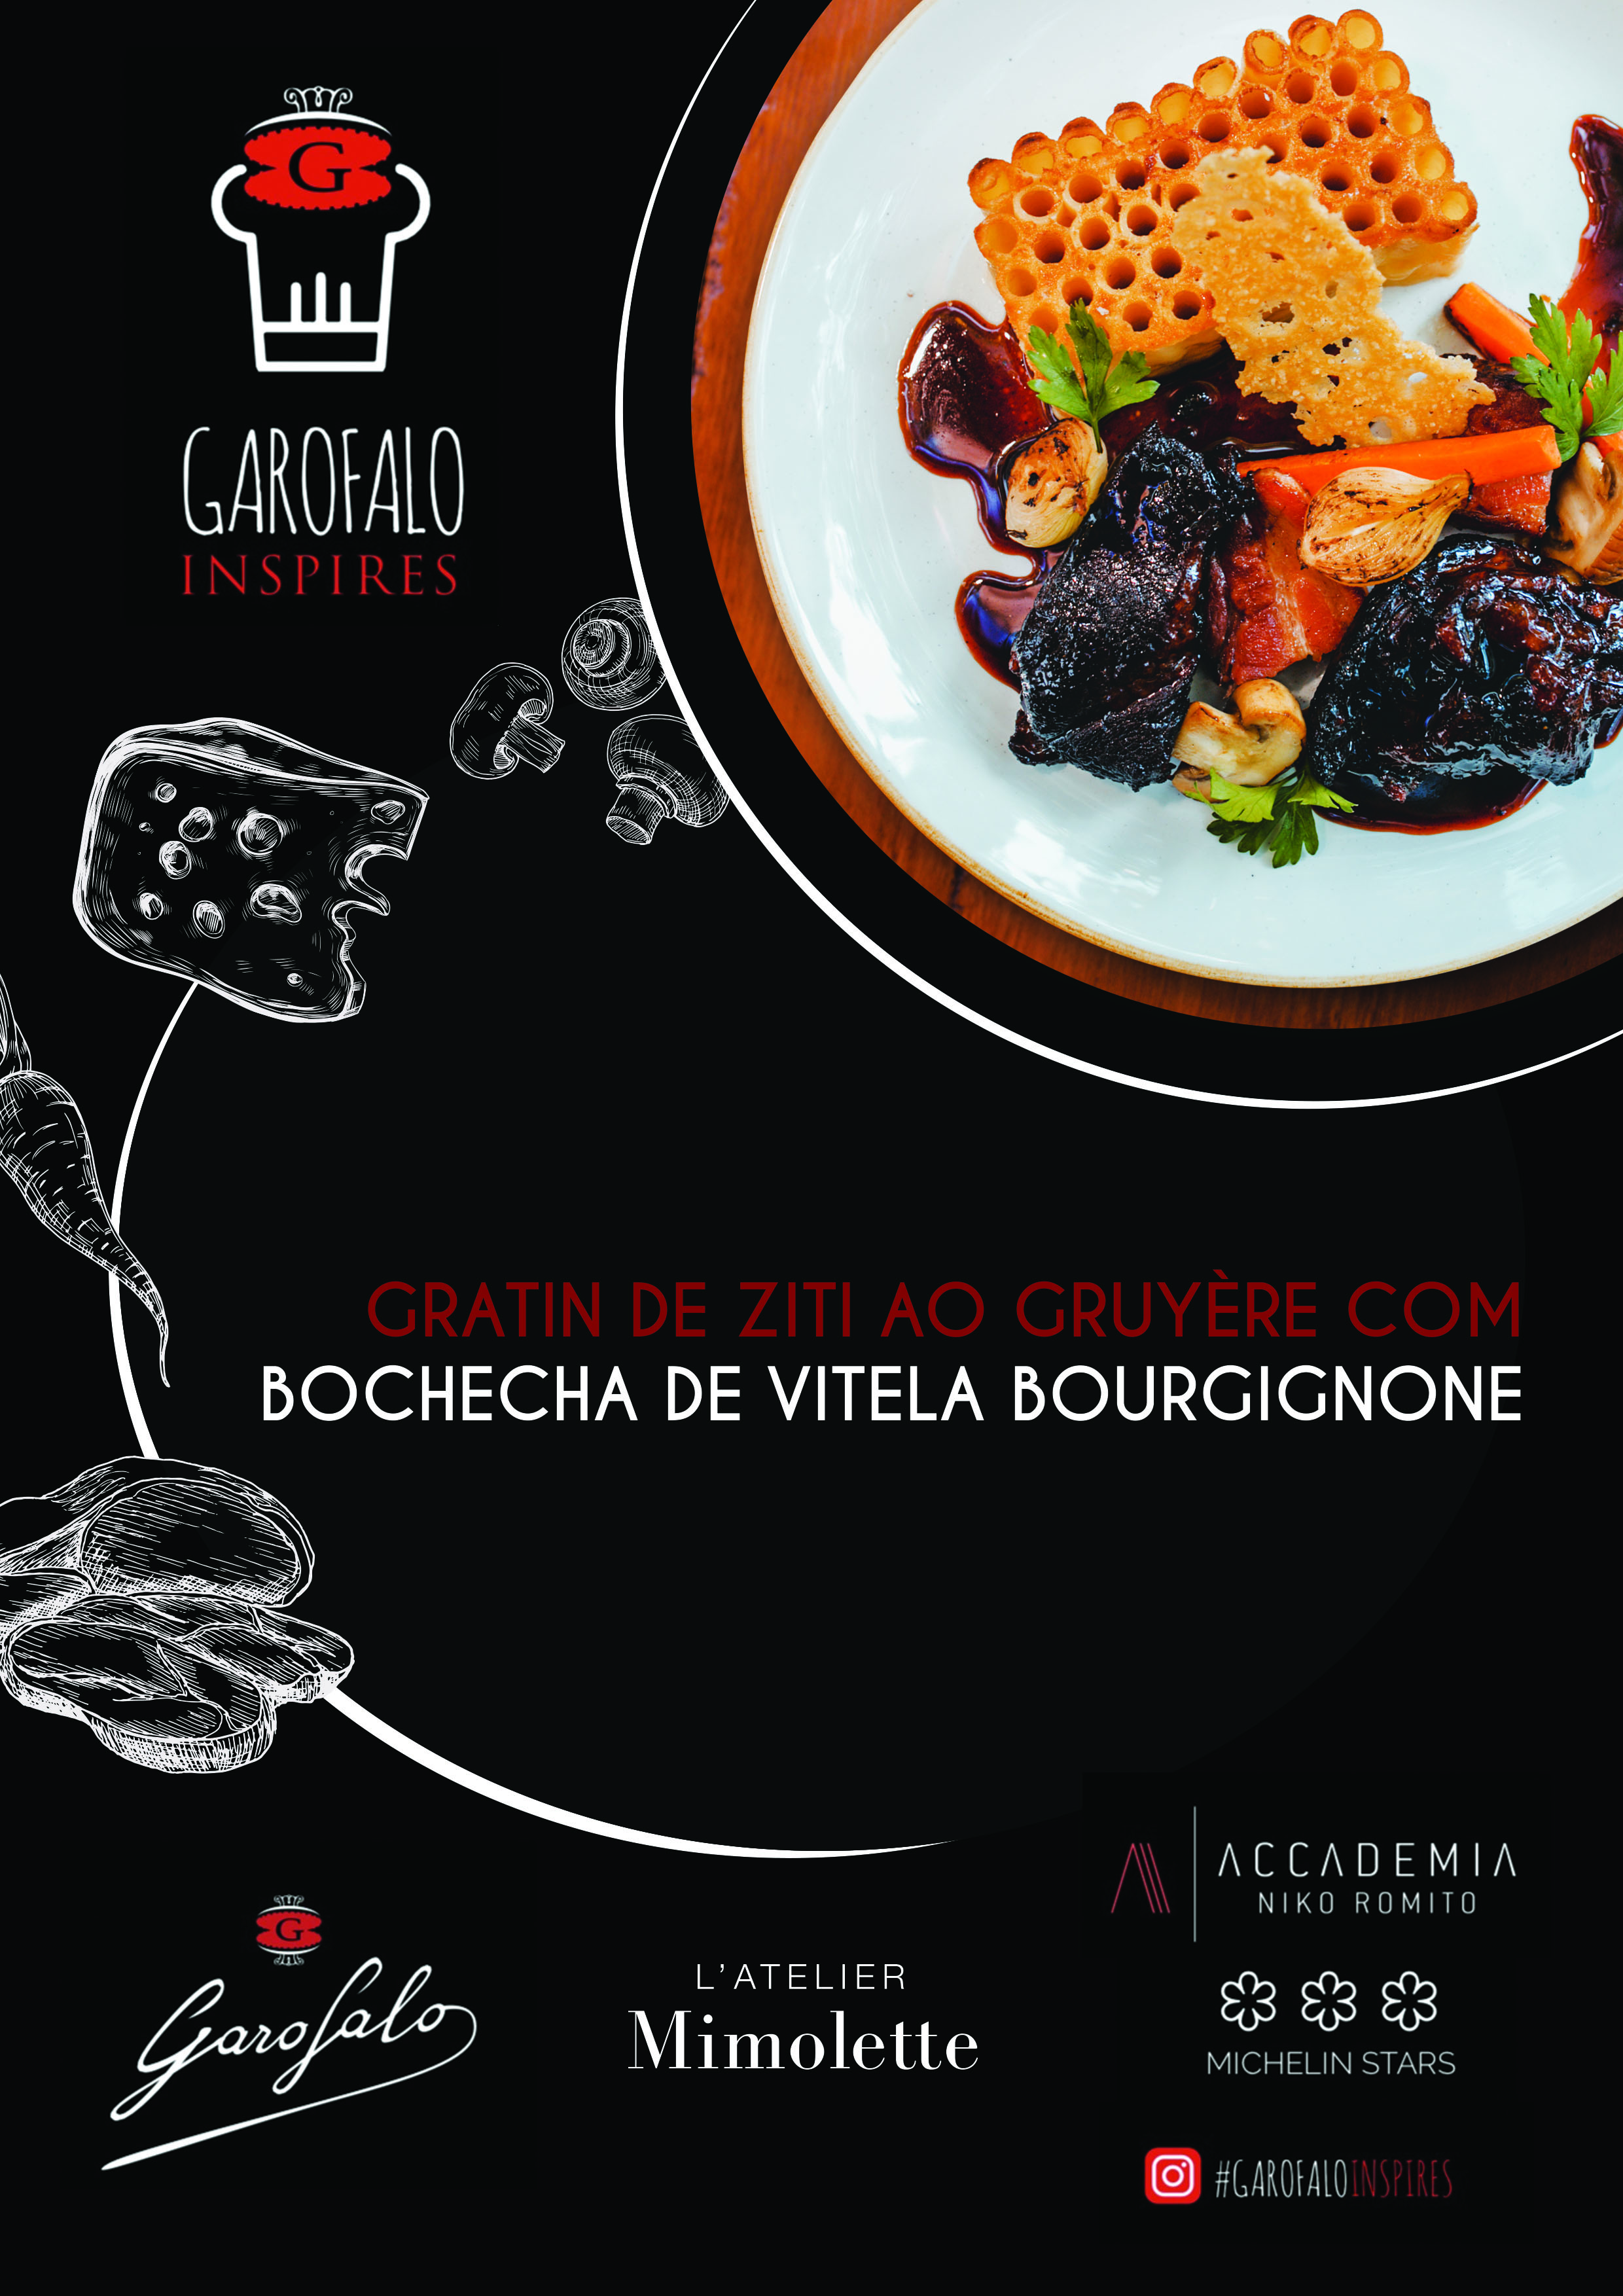 Garofalo - Bochecha bourgignone com gratin de ziti ao gruyère